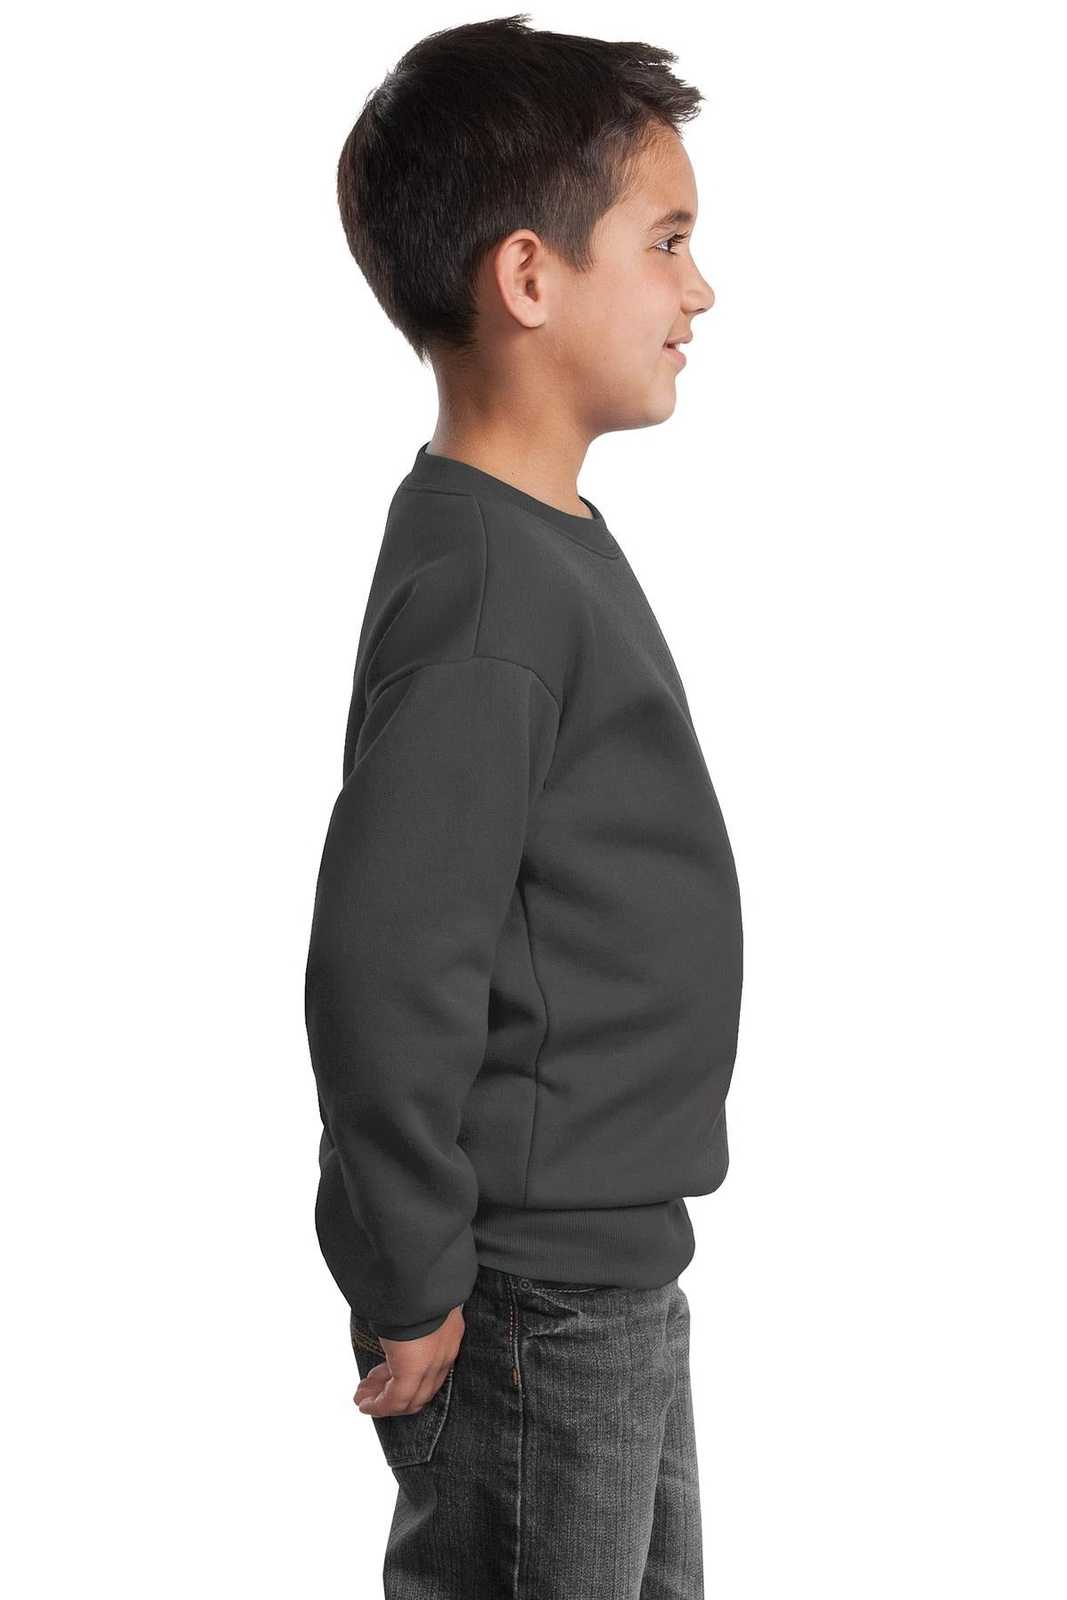 Port &amp; Company PC90Y Youth Core Fleece Crewneck Sweatshirt - Charcoal - HIT a Double - 3